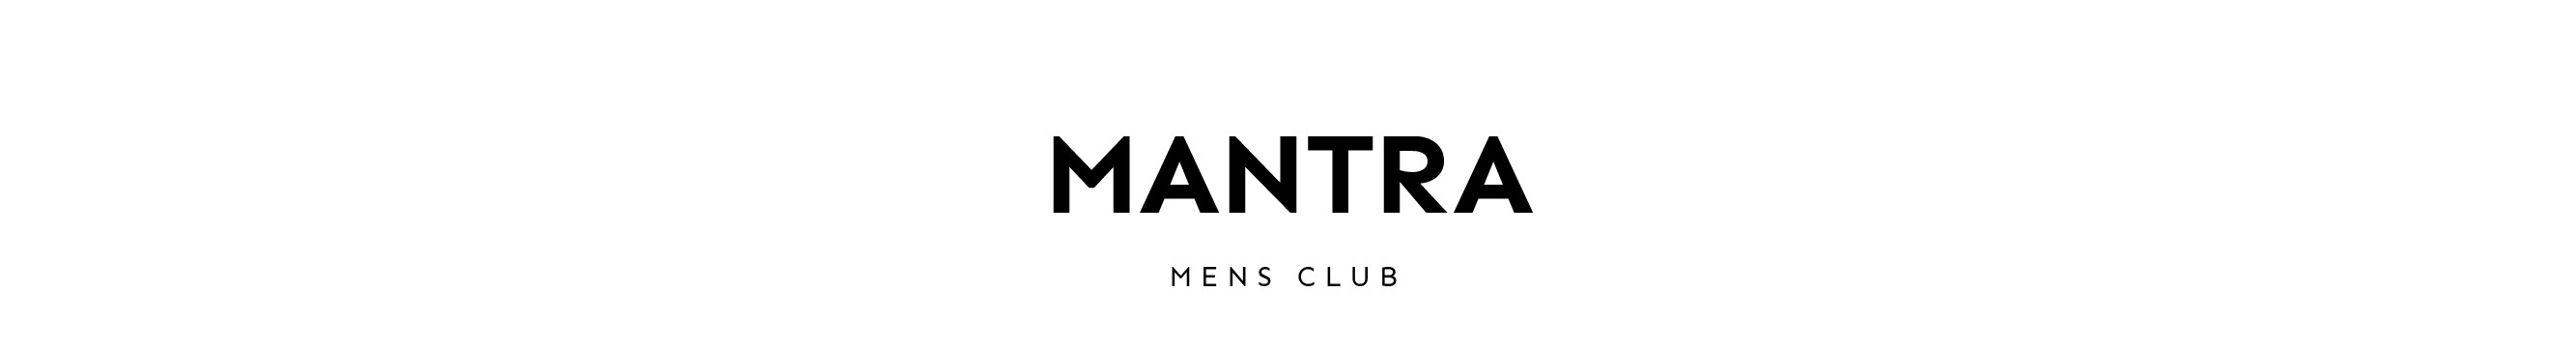 Mantra Men's Club Coupon Codes